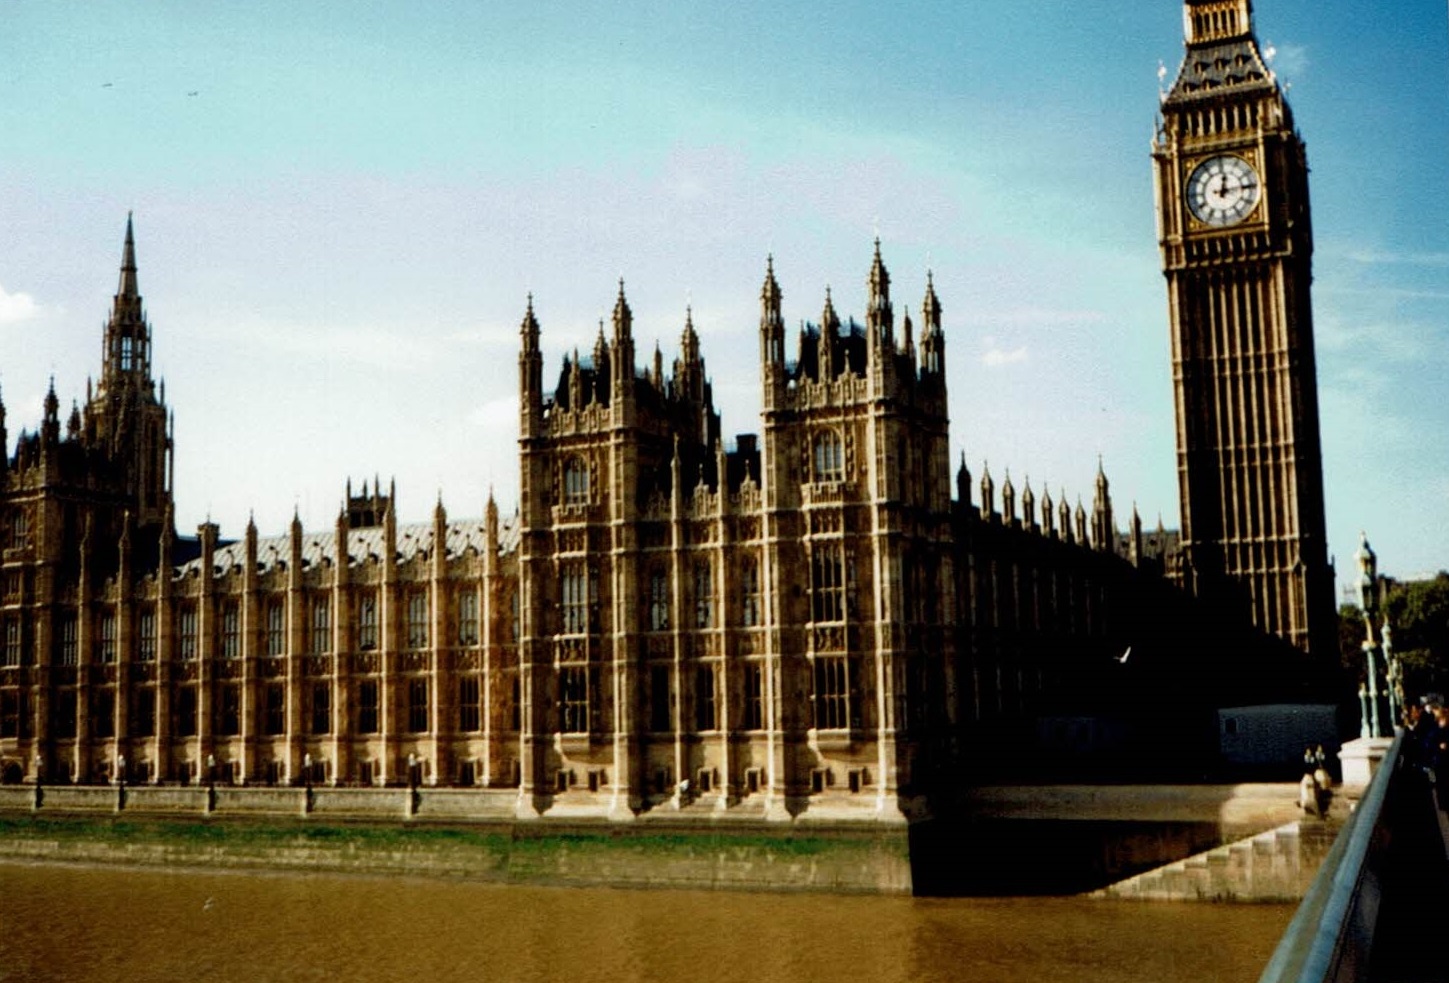 London Houses of Parlament und Big Ben